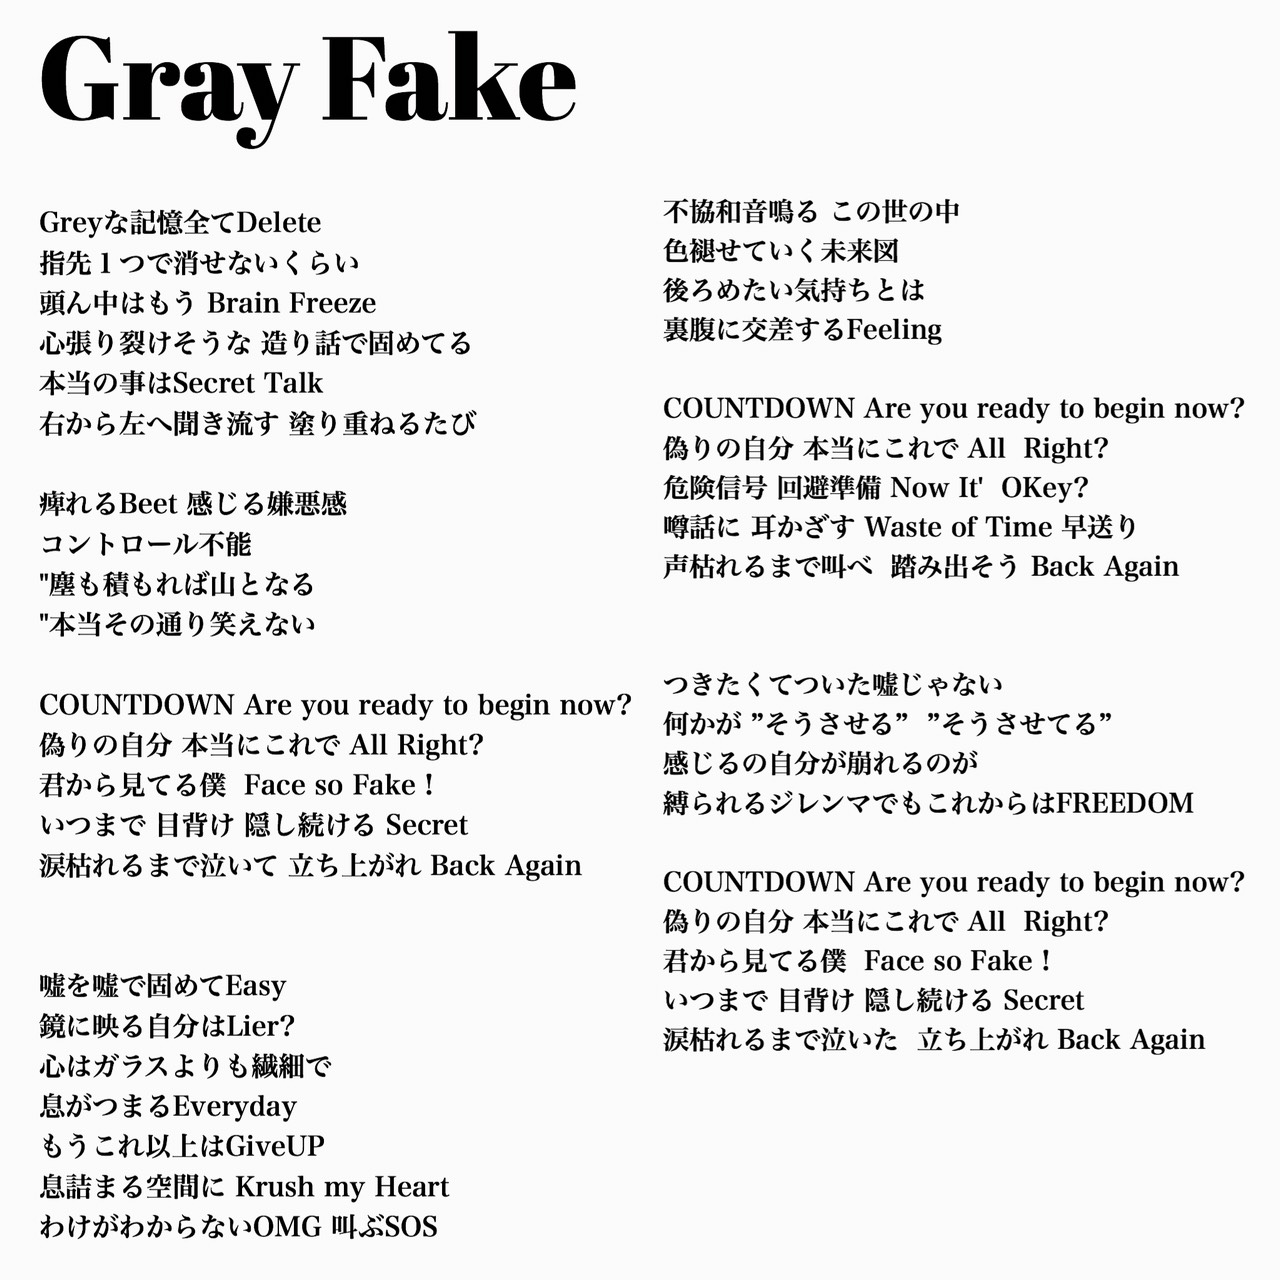 Gray Fake 歌詞解説 株式会社撮れ高 映像技術 撮影技術 映像制作 東京 新宿